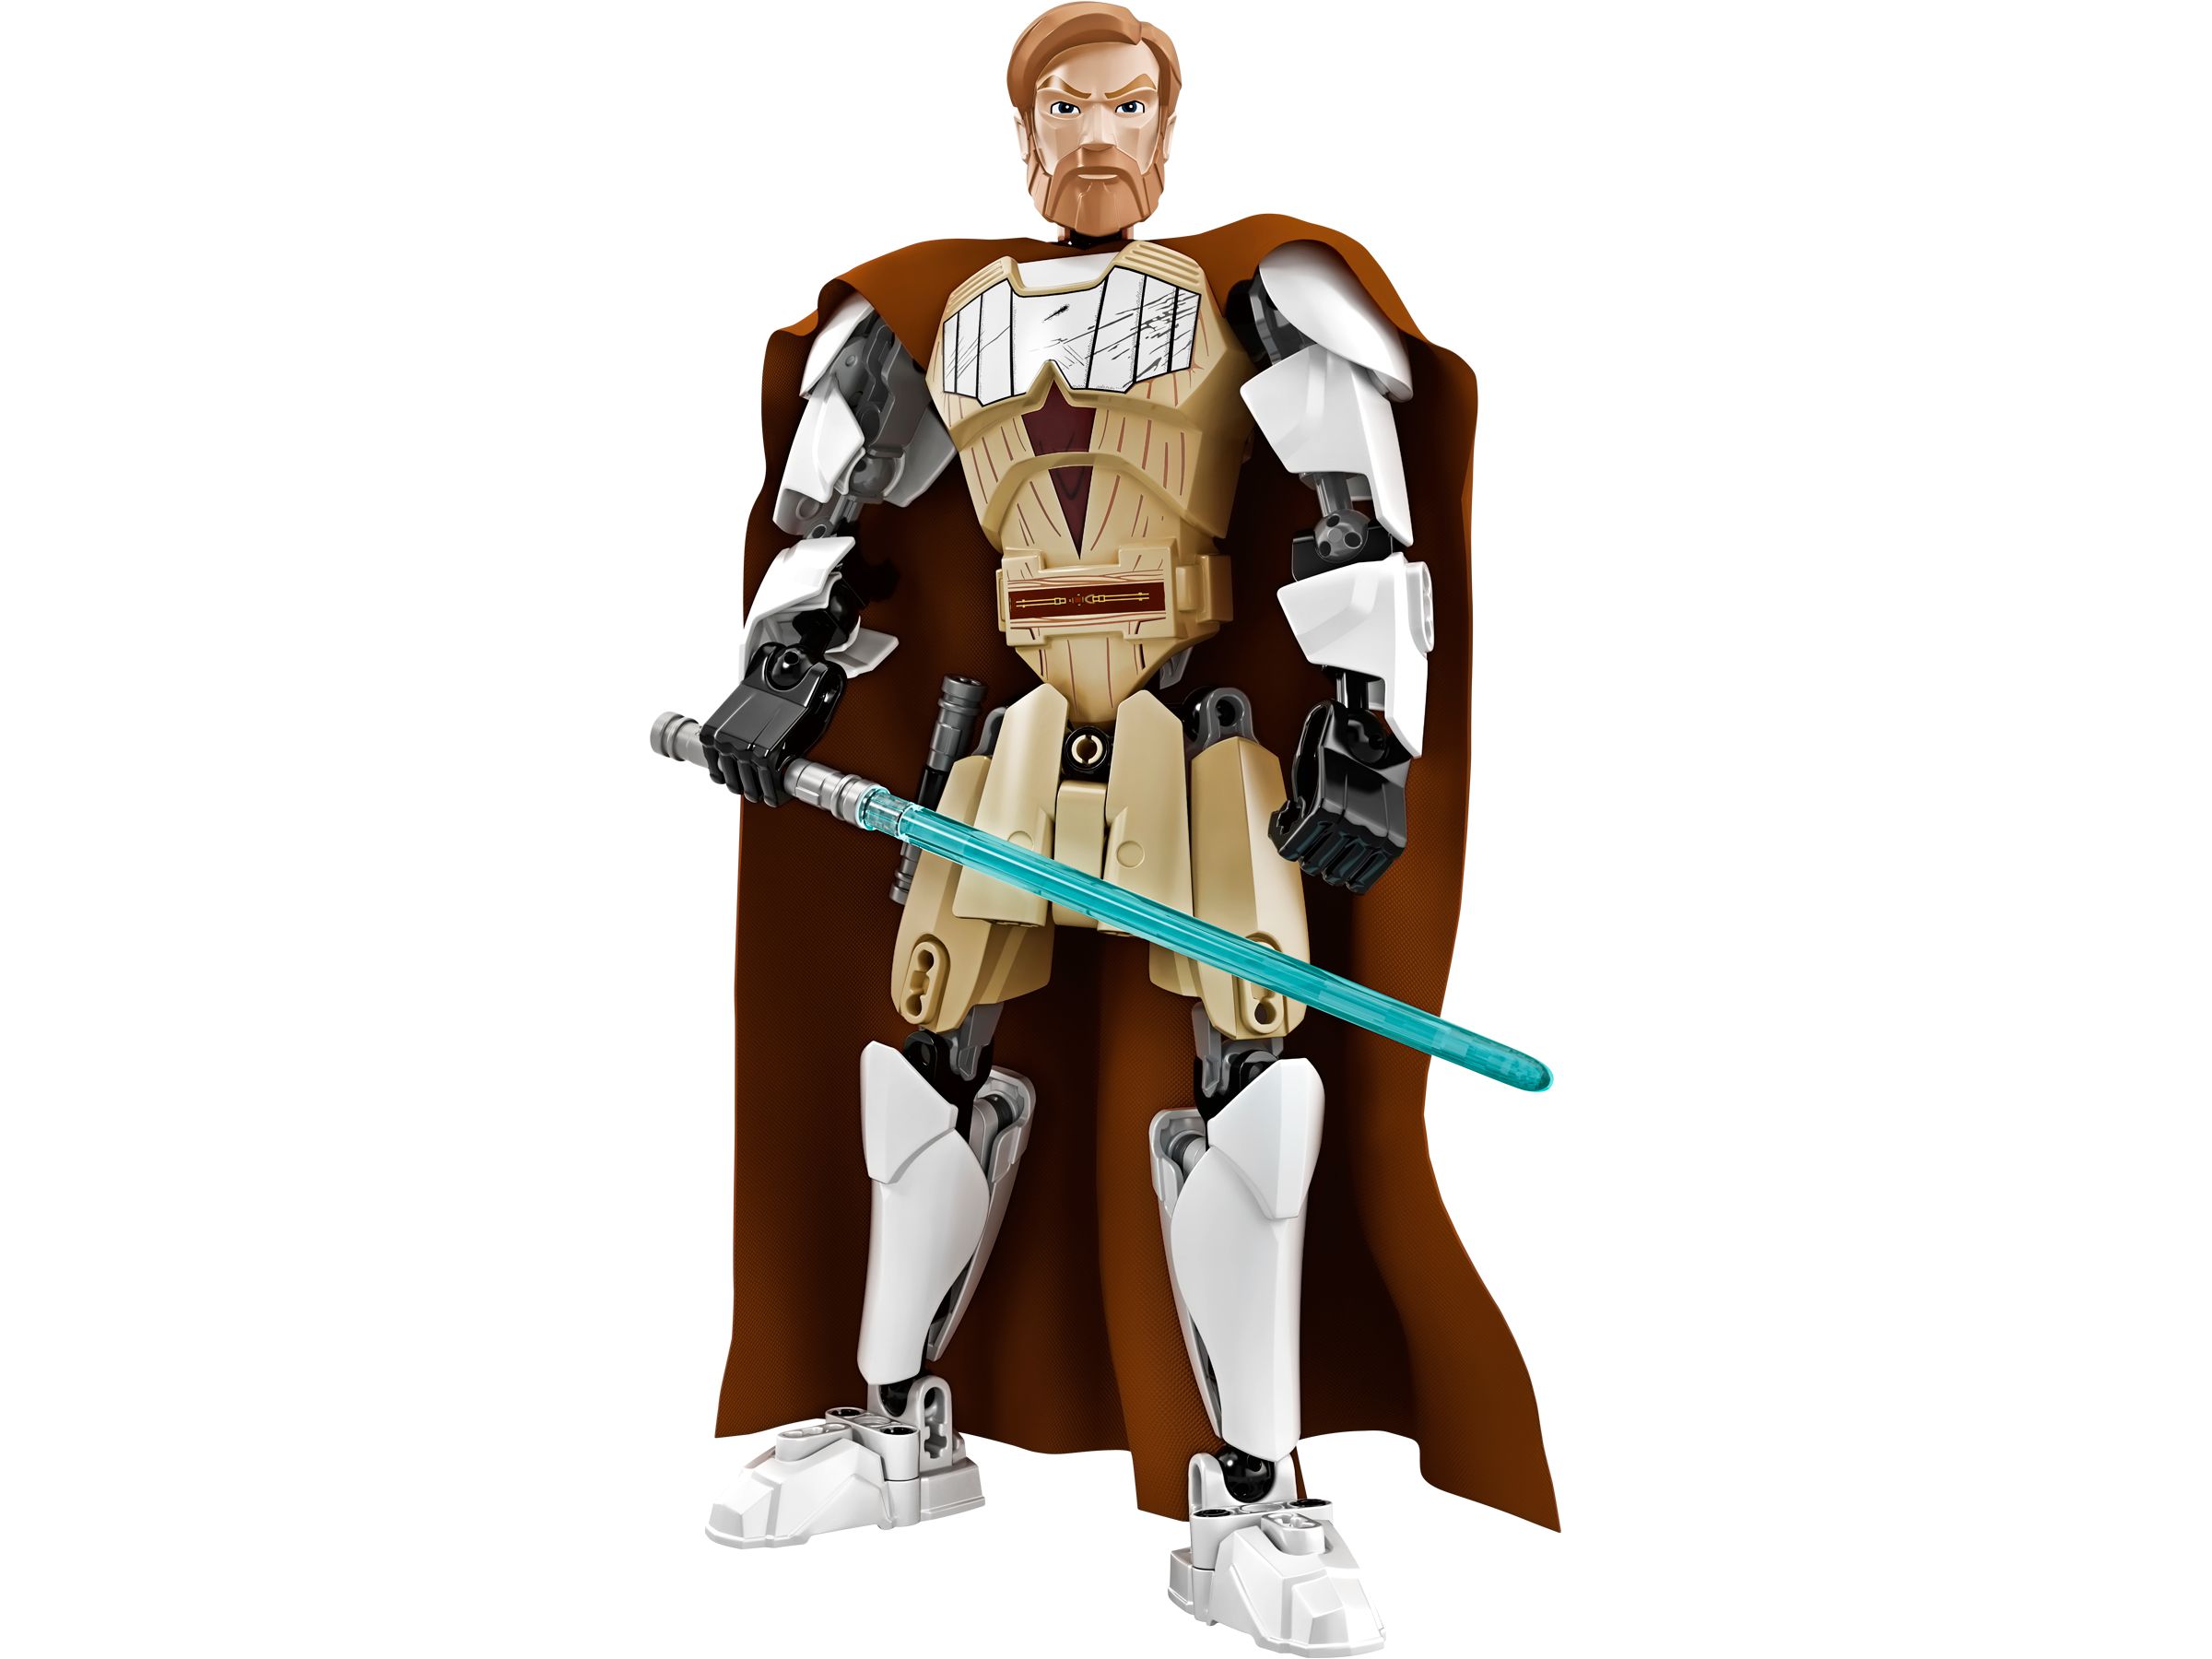 LEGO Star Wars Buildable Figures 75109 Obi-Wan Kenobi™ LEGO_75109_alt2.jpg